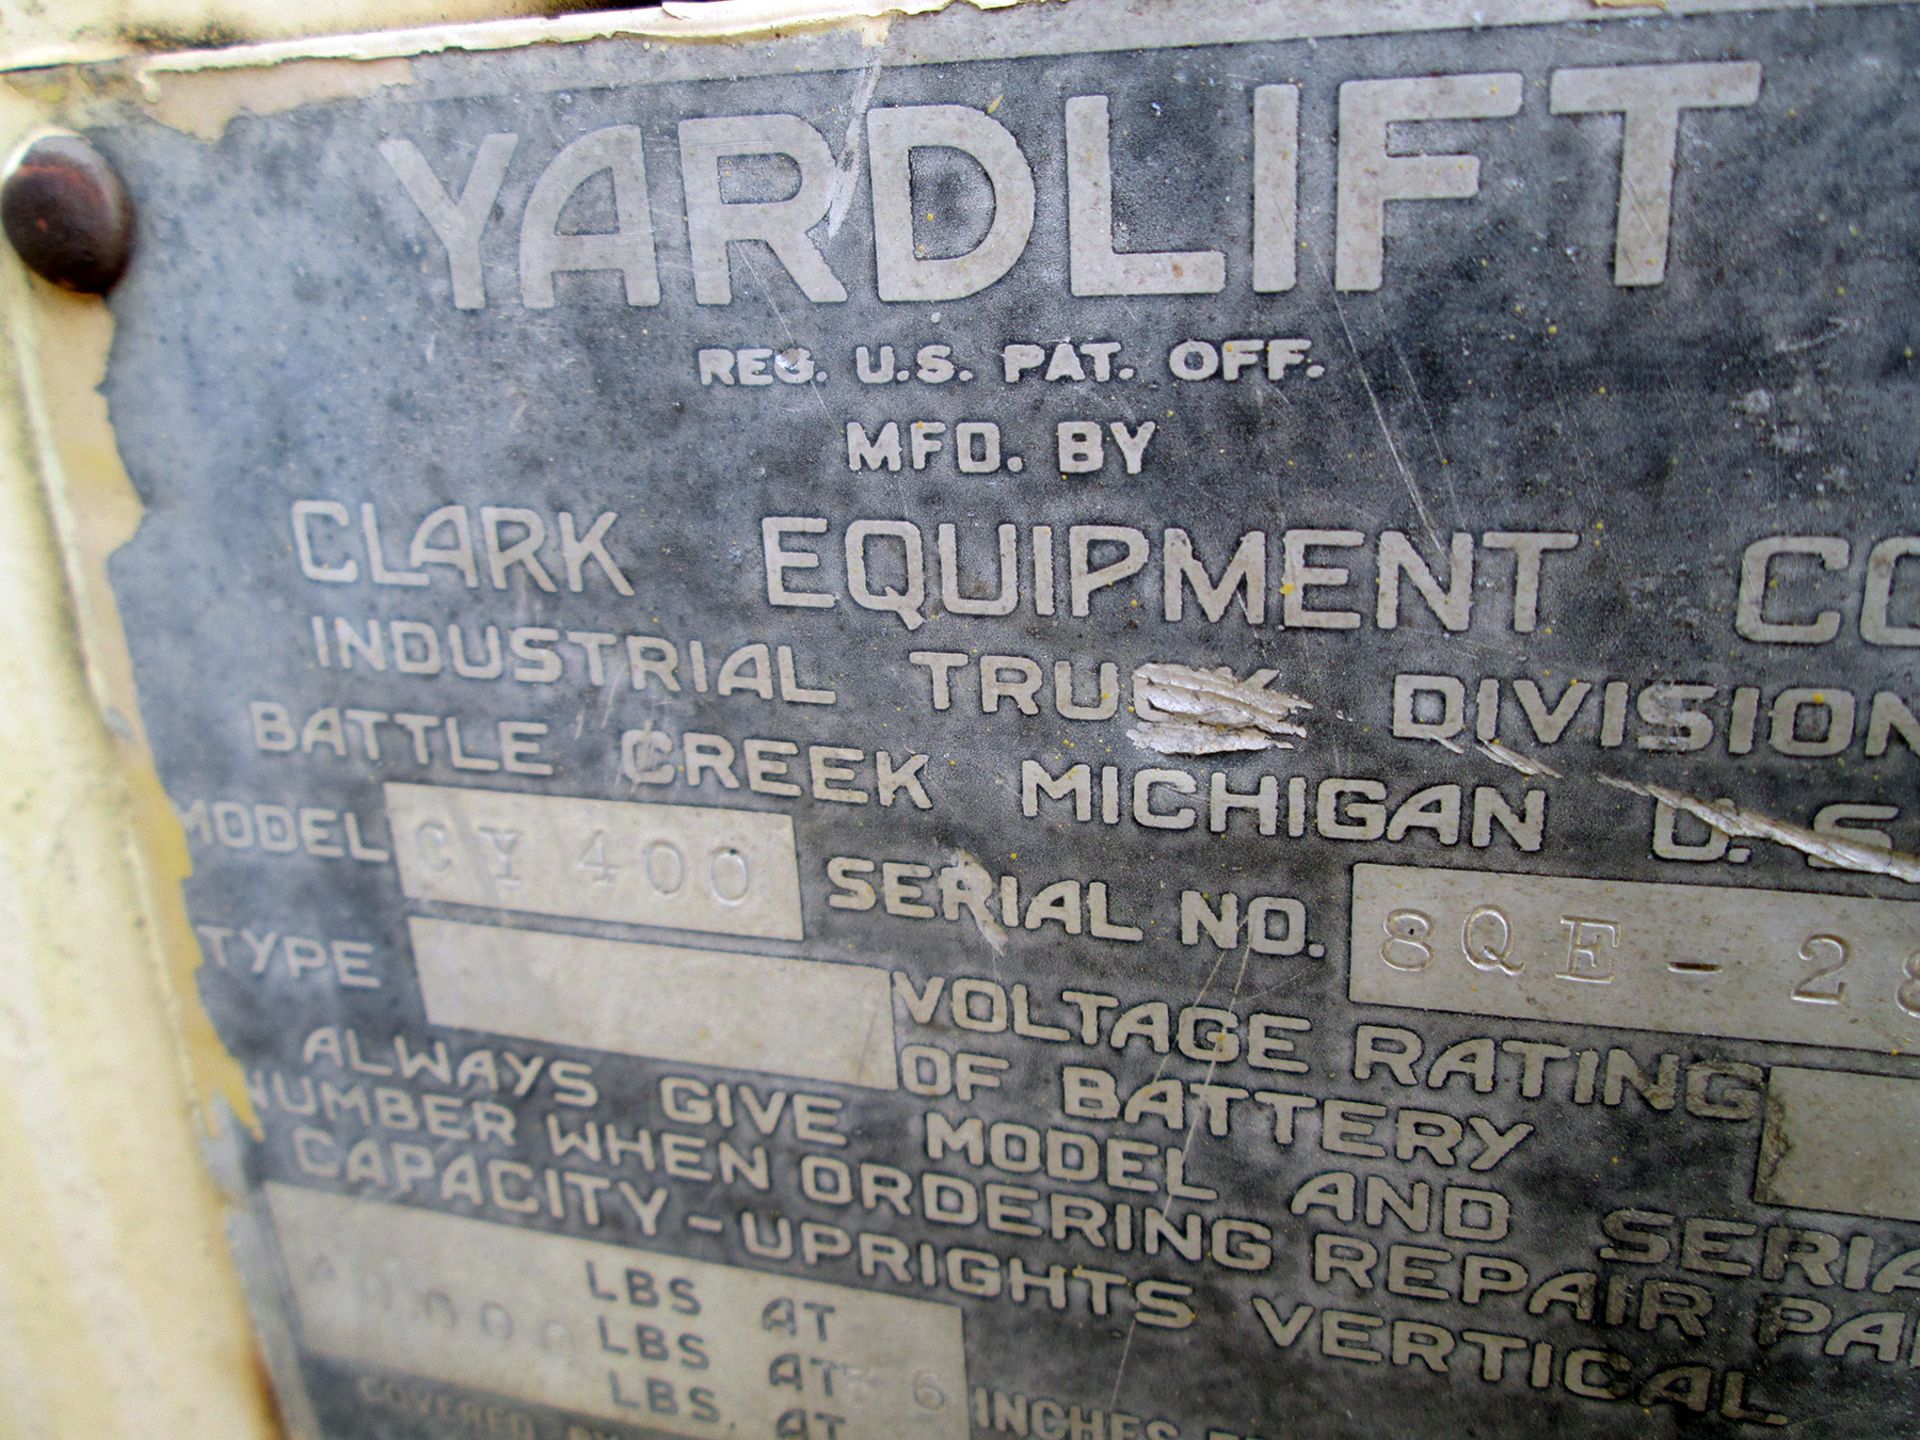 Clark 40,000 lb. Model CY400 Pneumatic Forklift - Image 4 of 4